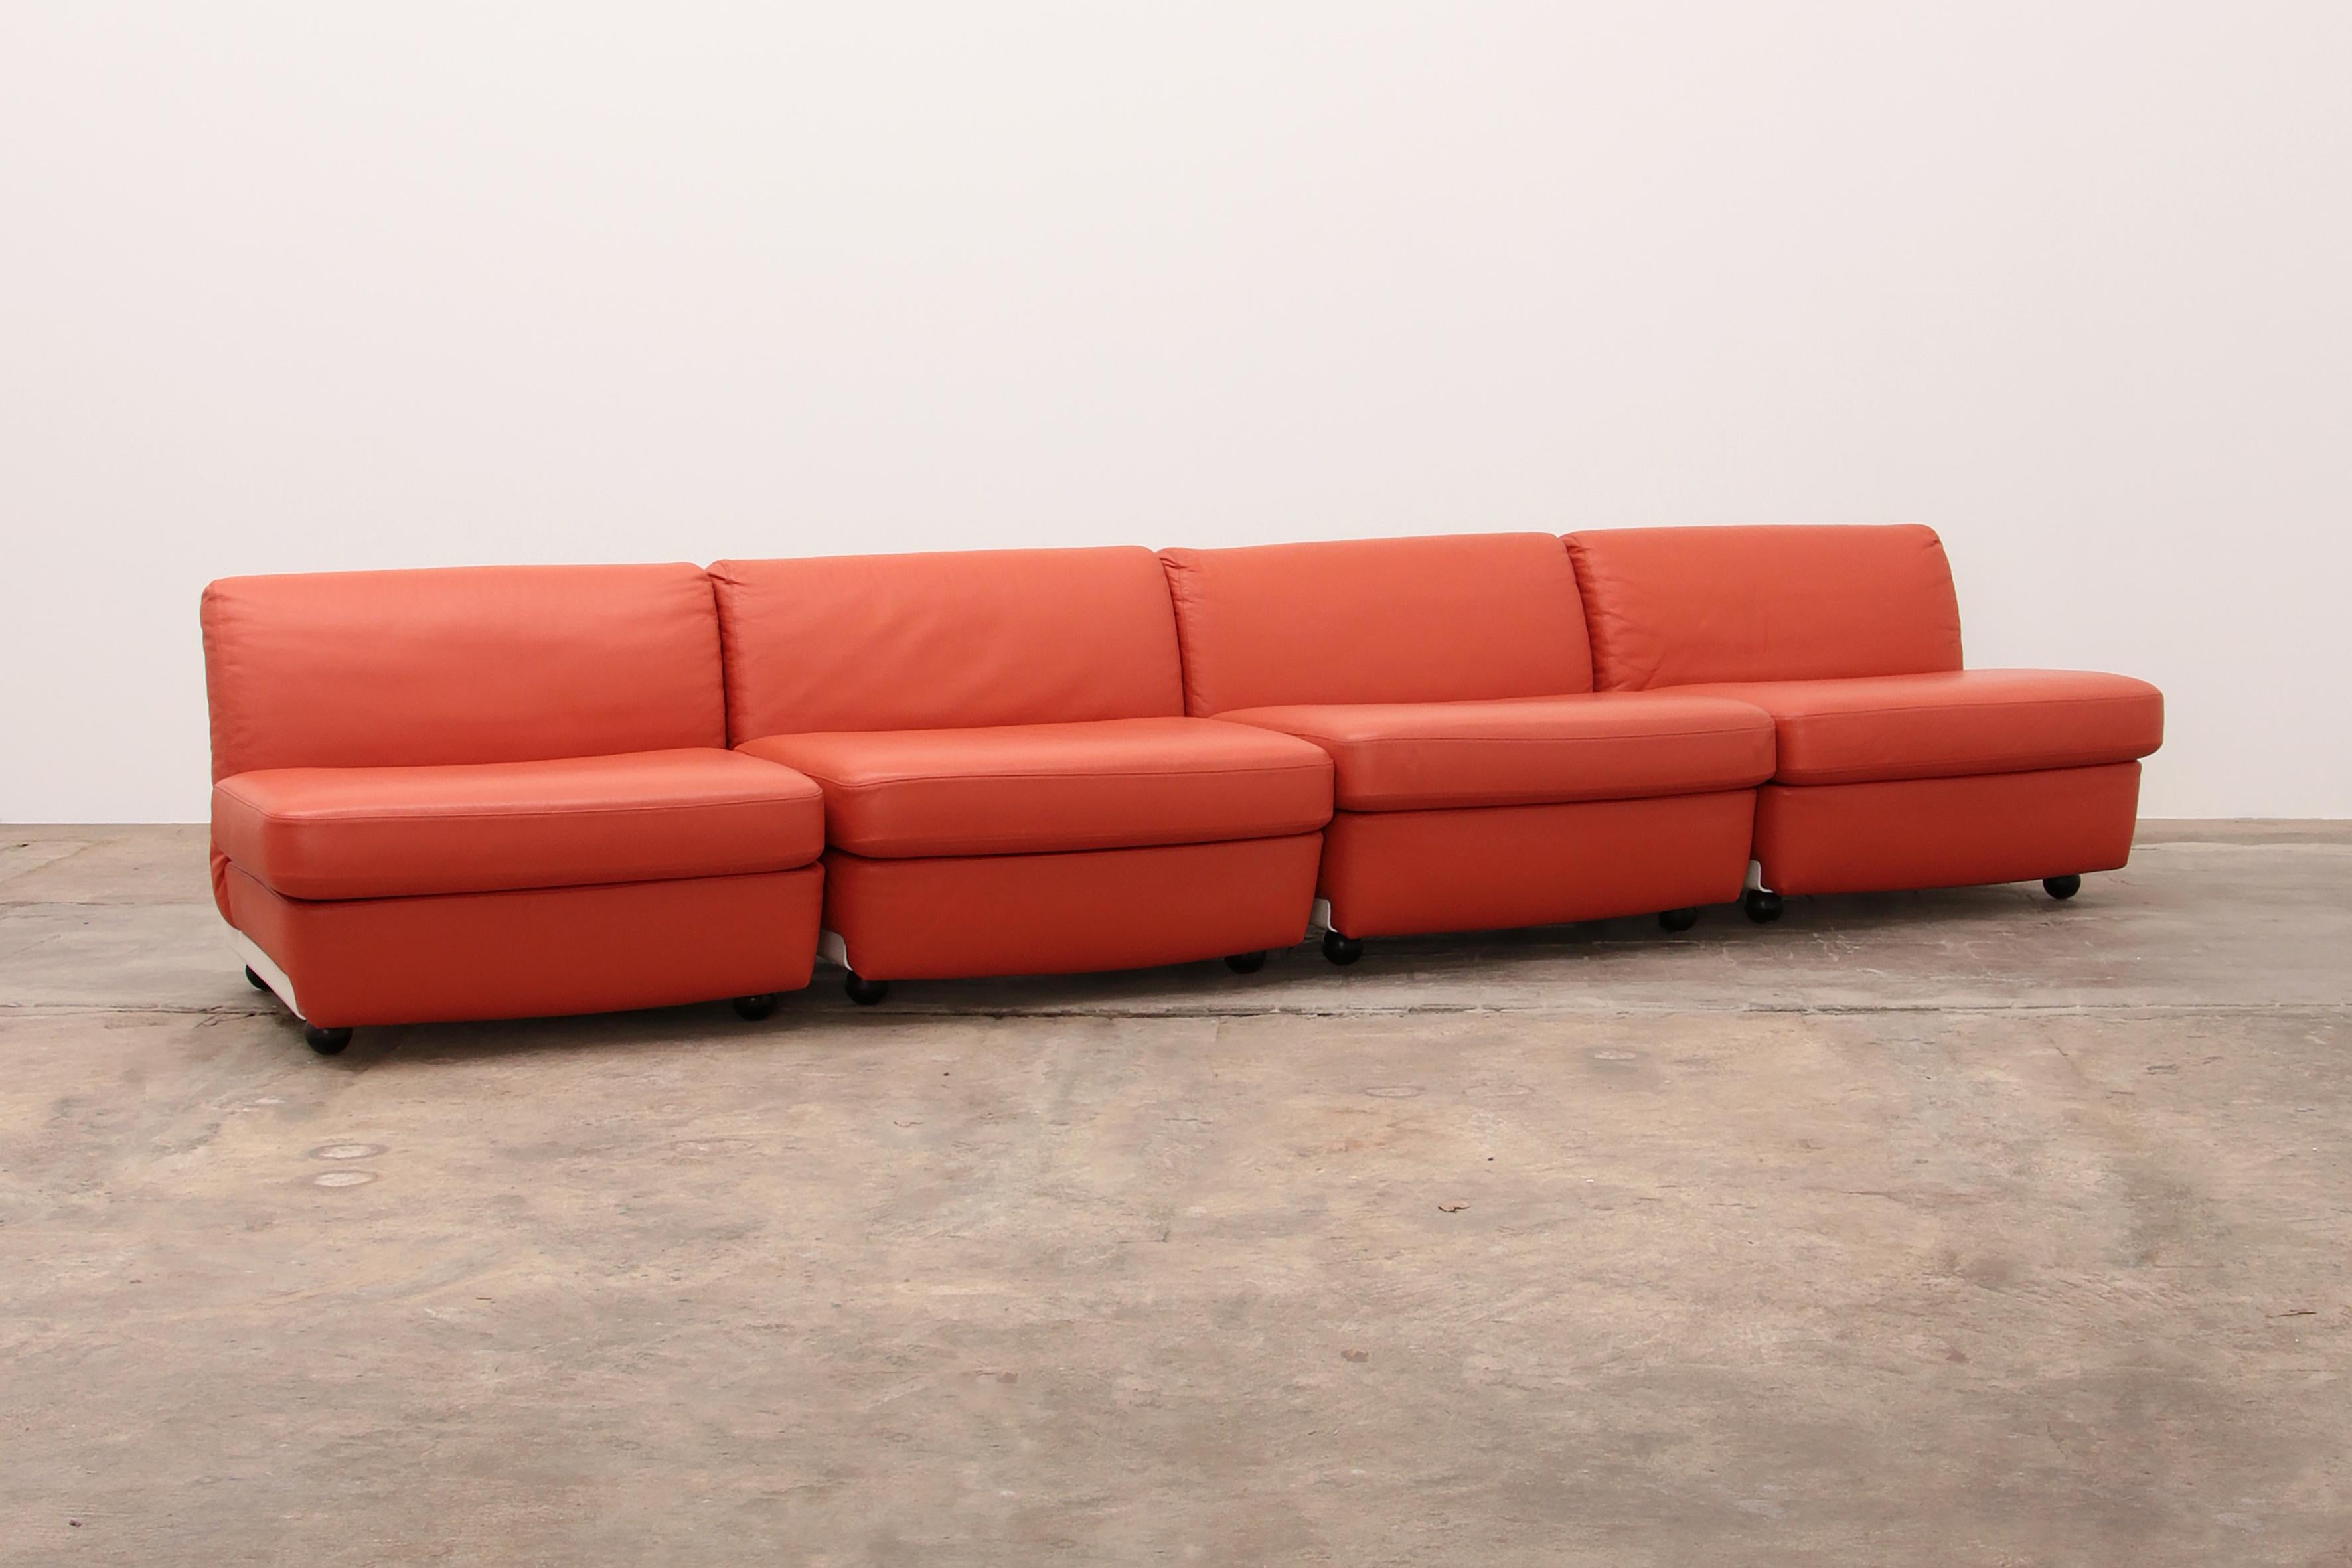 Italian Mario Bellini Amanta Modular Sofa in Orange Leather for C&B Italy, 1960s For Sale